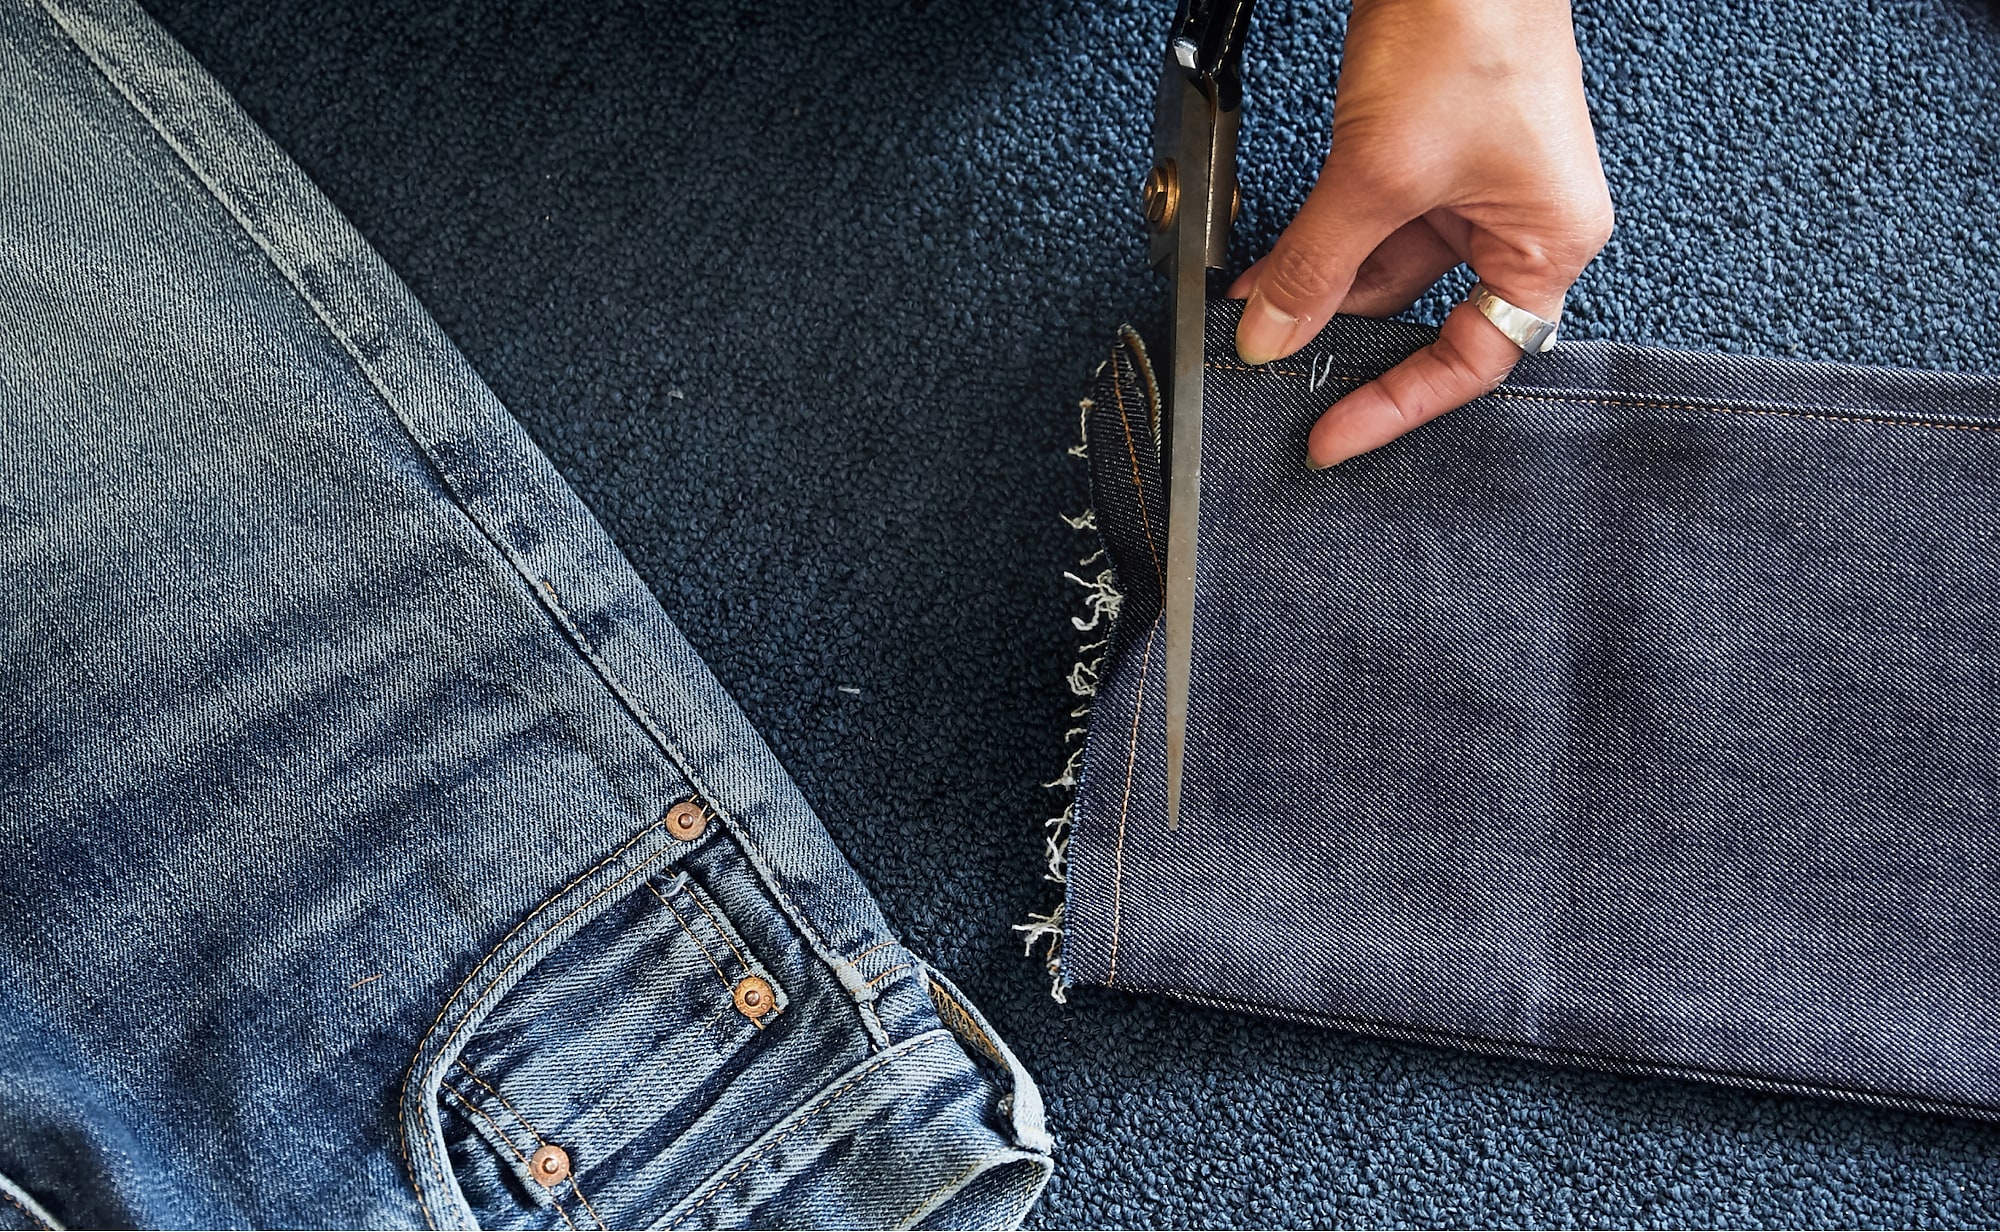 Designer Embroidered Purple Wedgie Jeans For Men 10% Off Wholesale